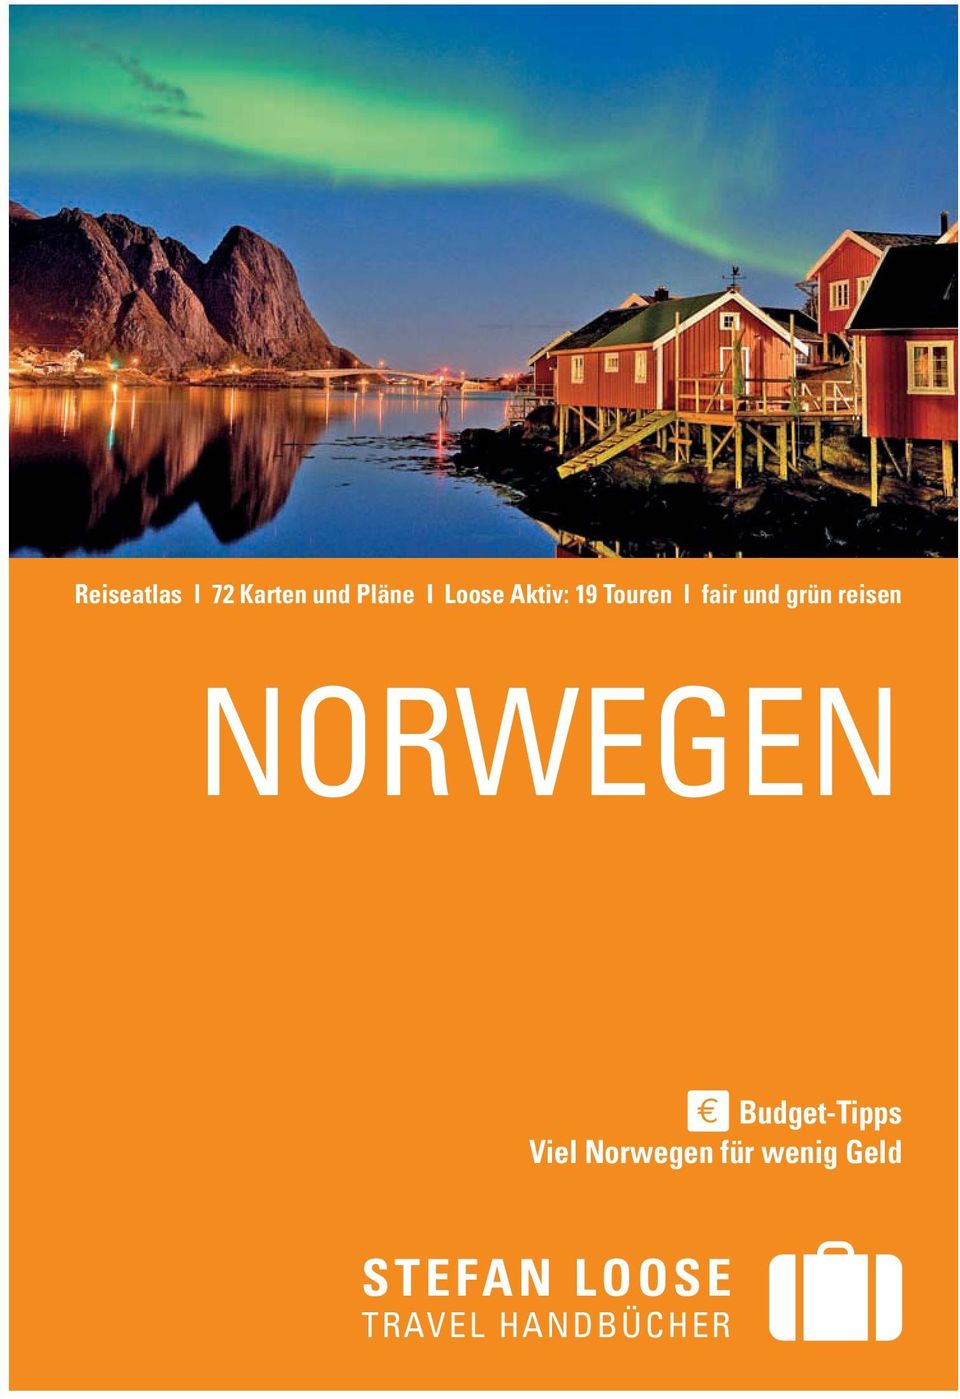 Norwegen Budget-Tipps Viel Norwegen für